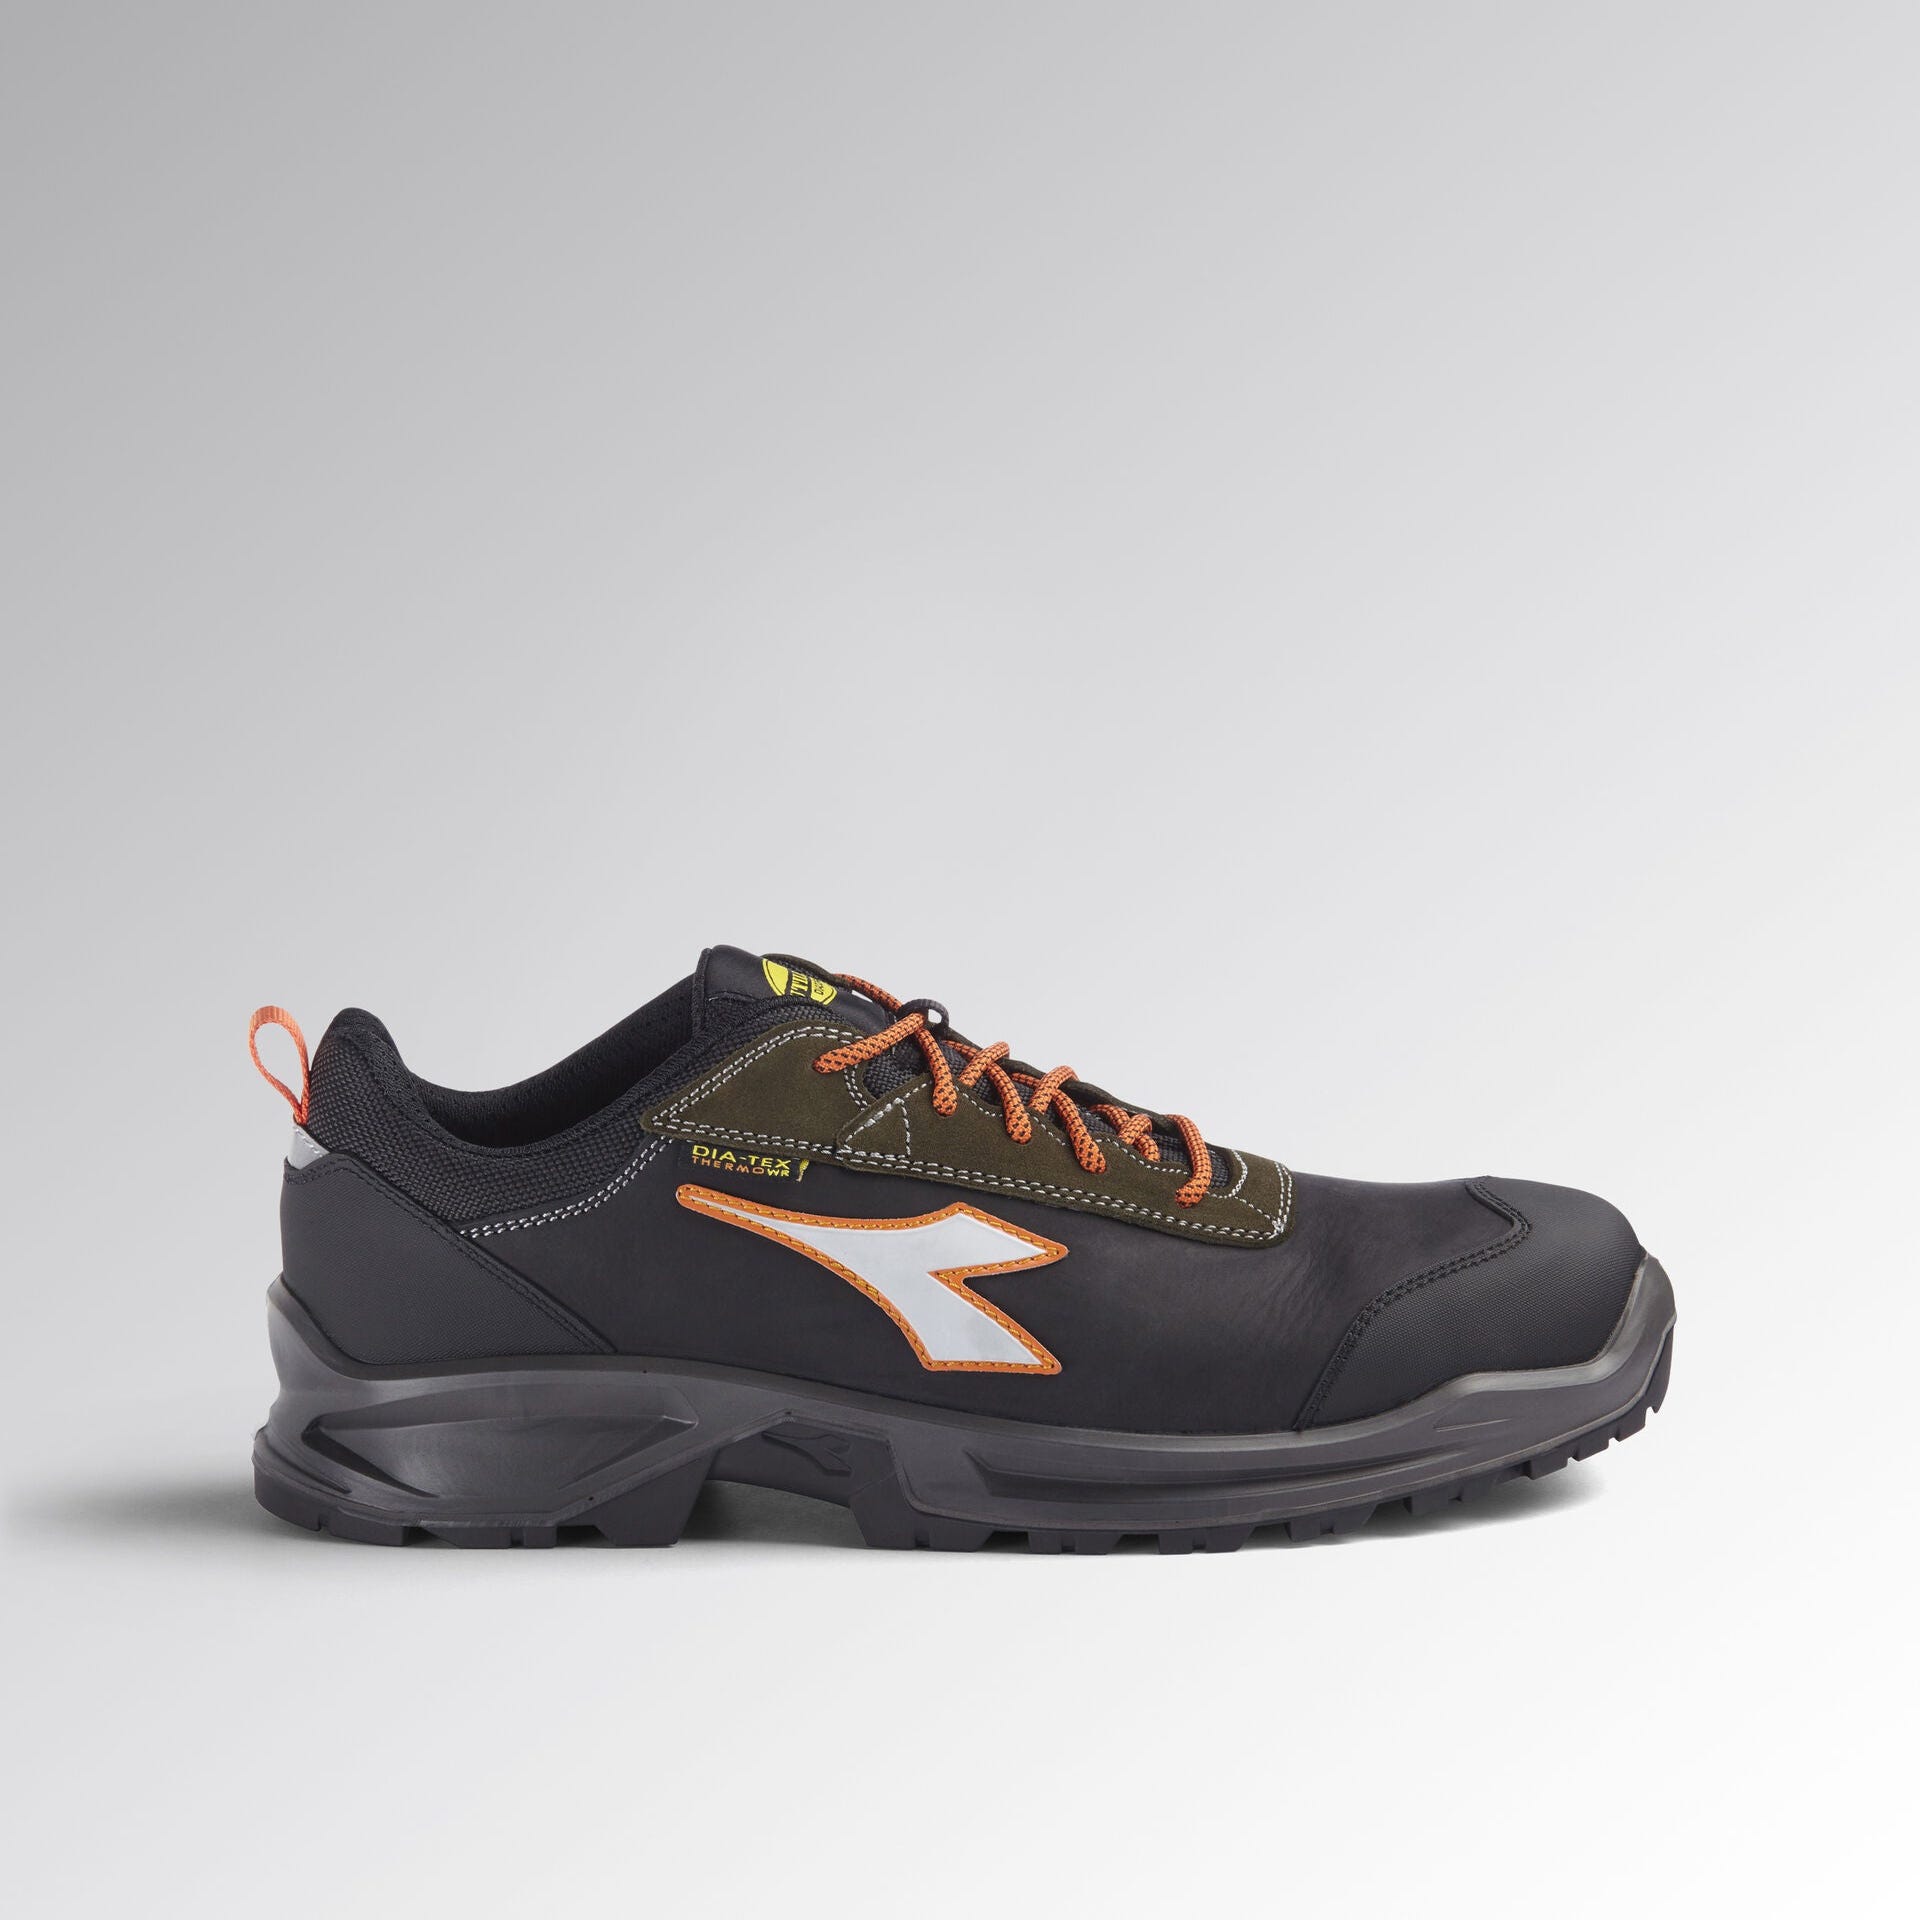 Chaussures imperméables thermo-isolantes SPORT DIATEX S3 Noir / Orange 44 5